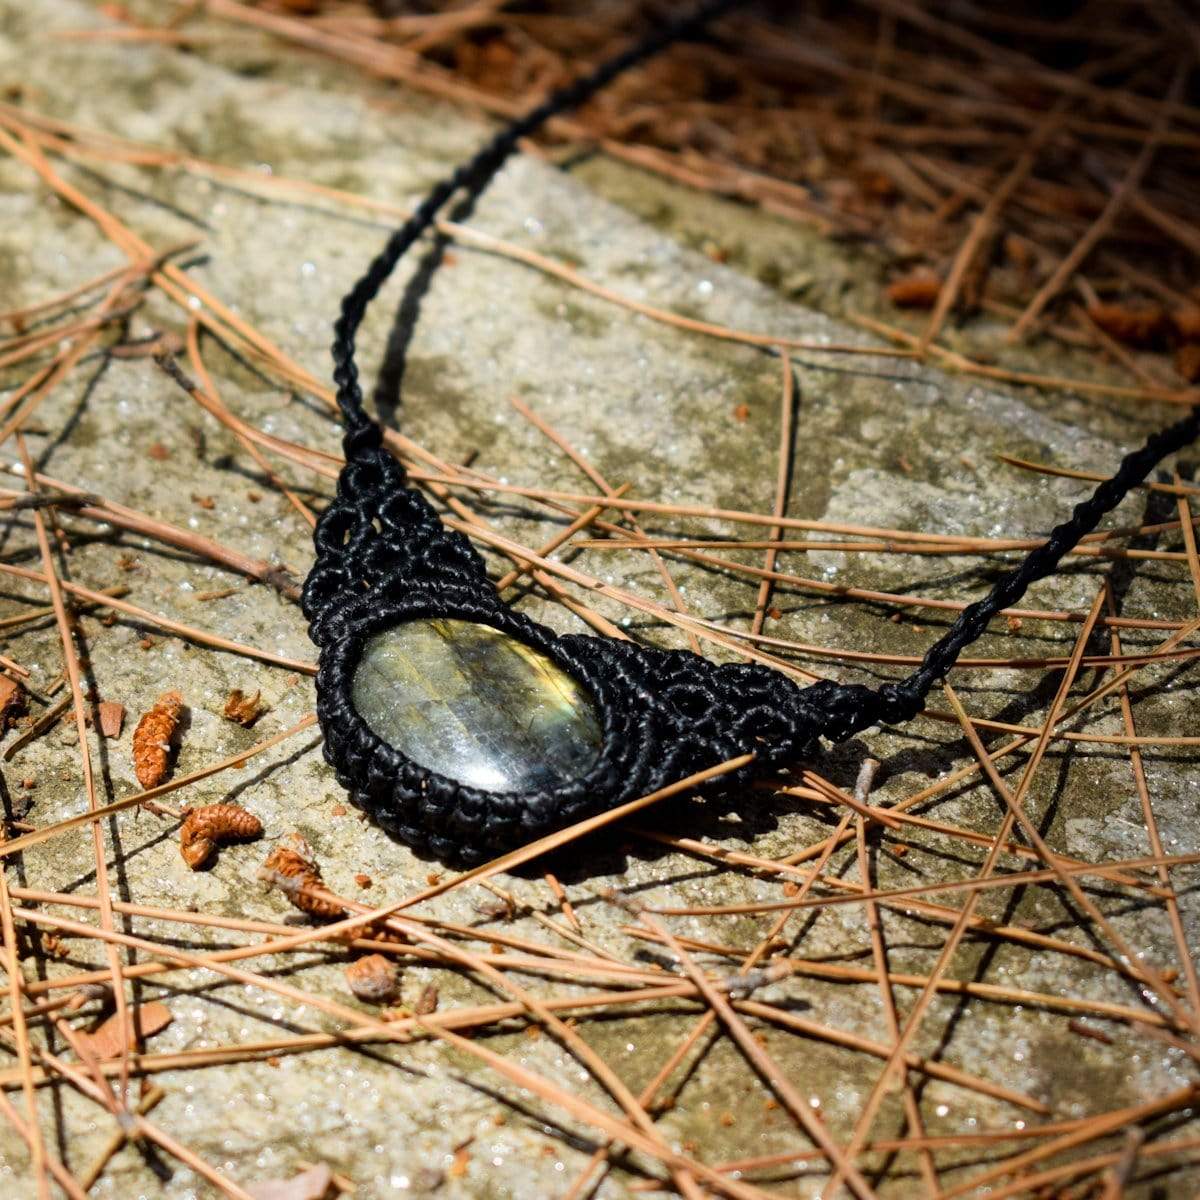 Macrame necklace Amorgos Necklace